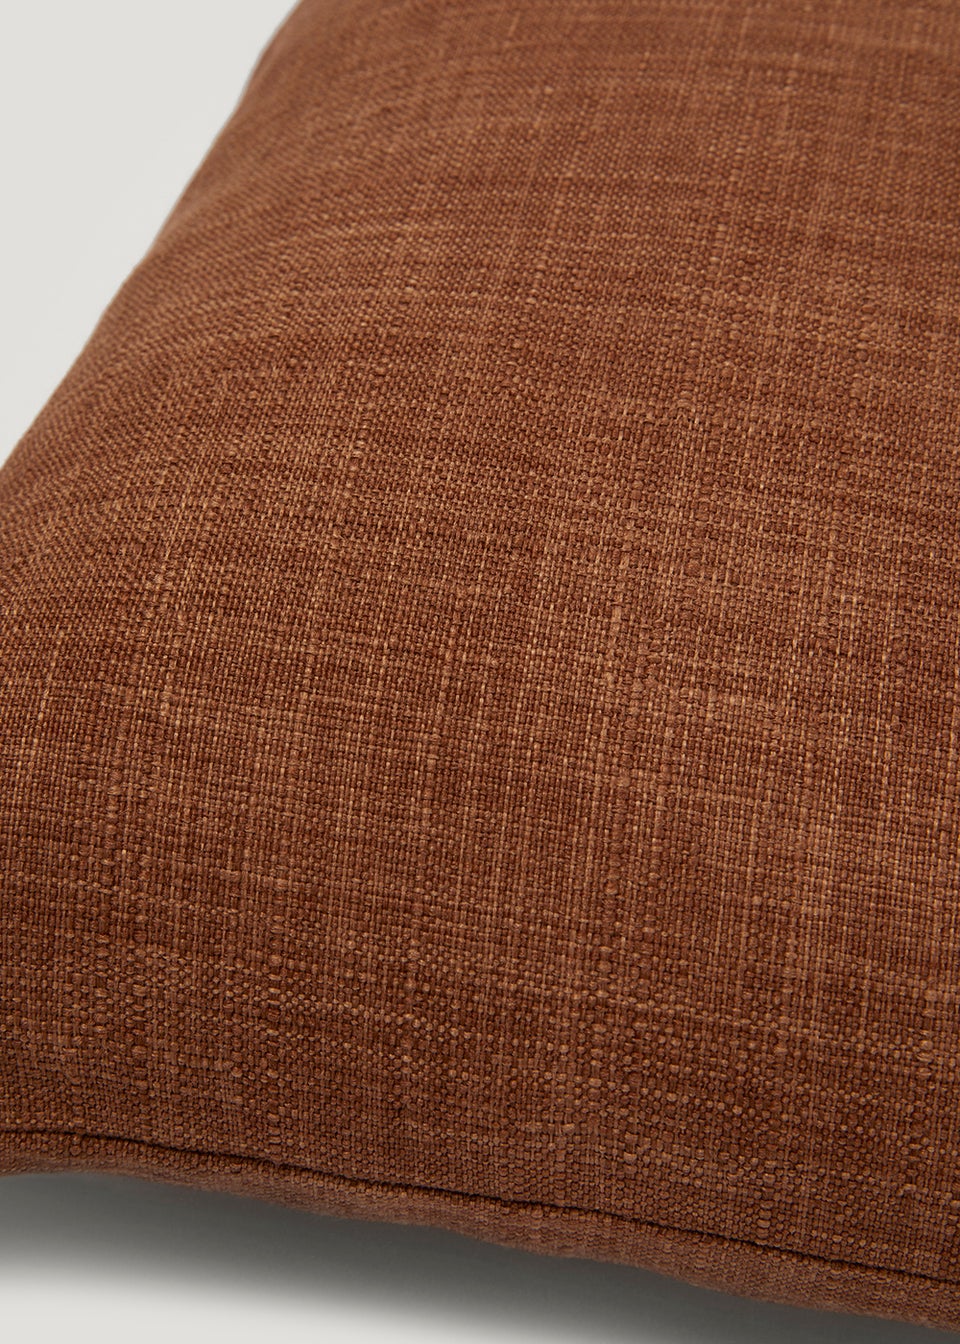 Orange Linen-Look Cushion (43cm x 43cm)